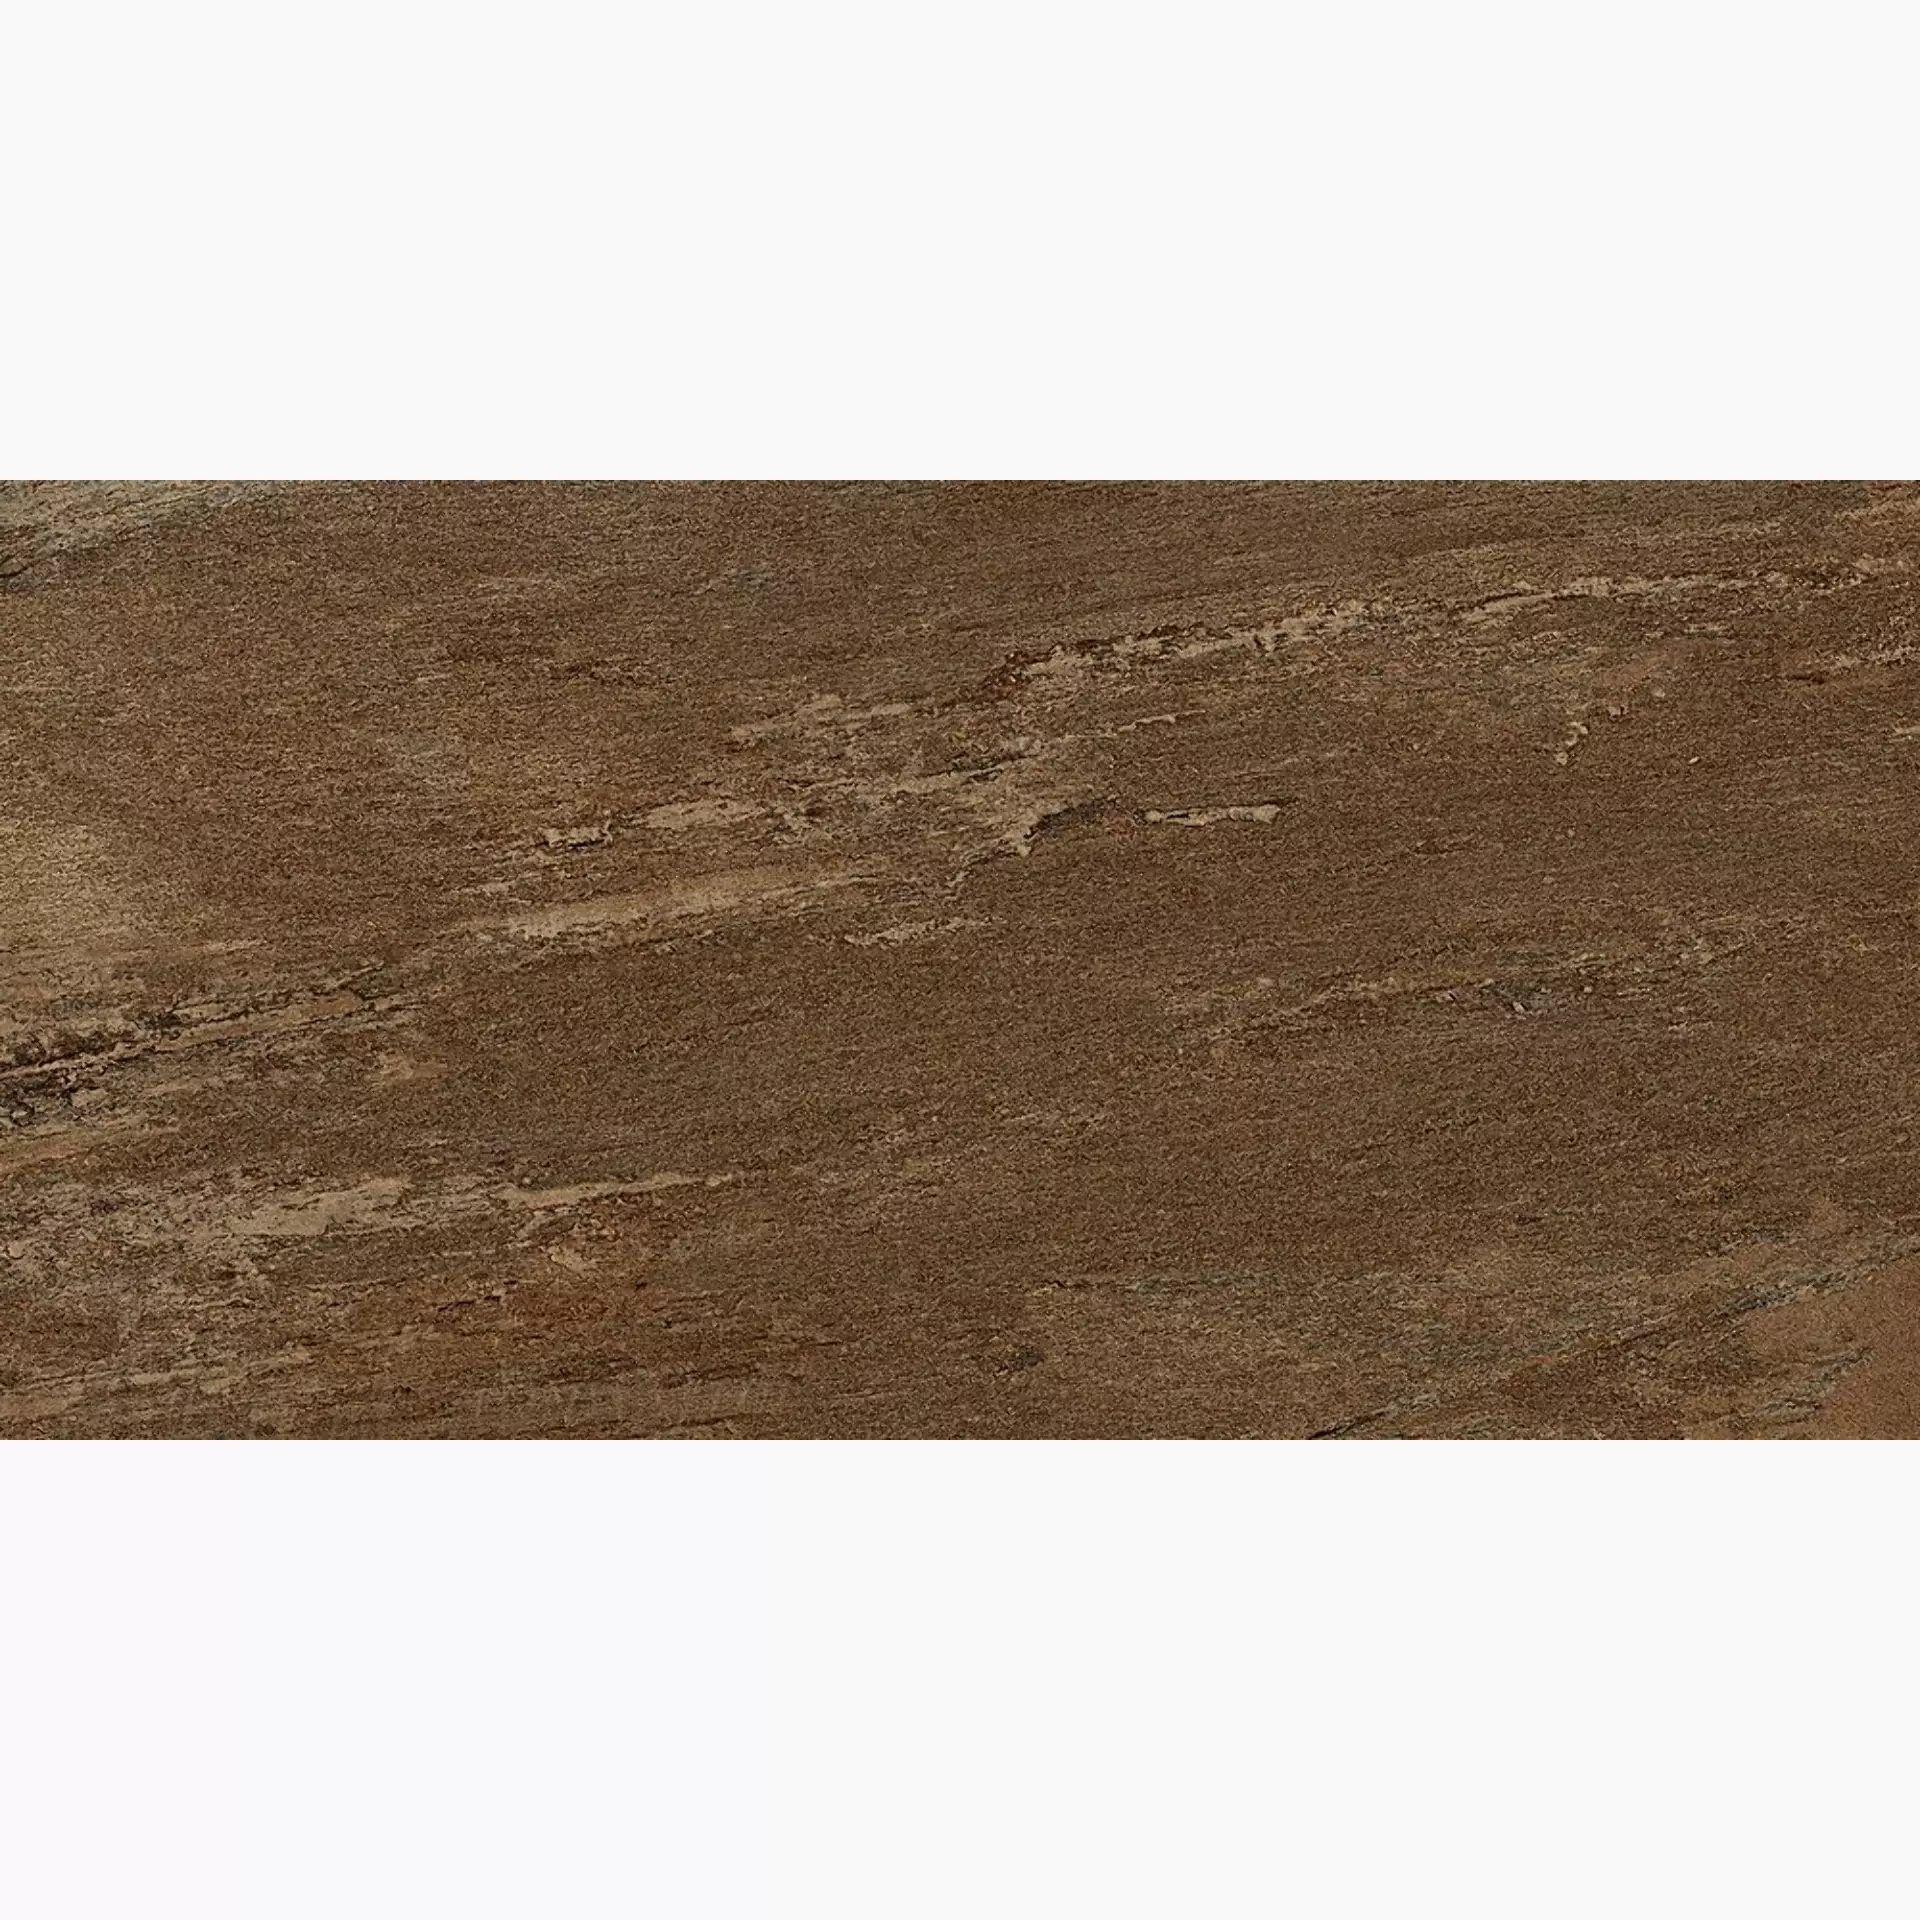 Century Stonerock Rust Stone Two – Grip 0119813 50x100cm 20mm